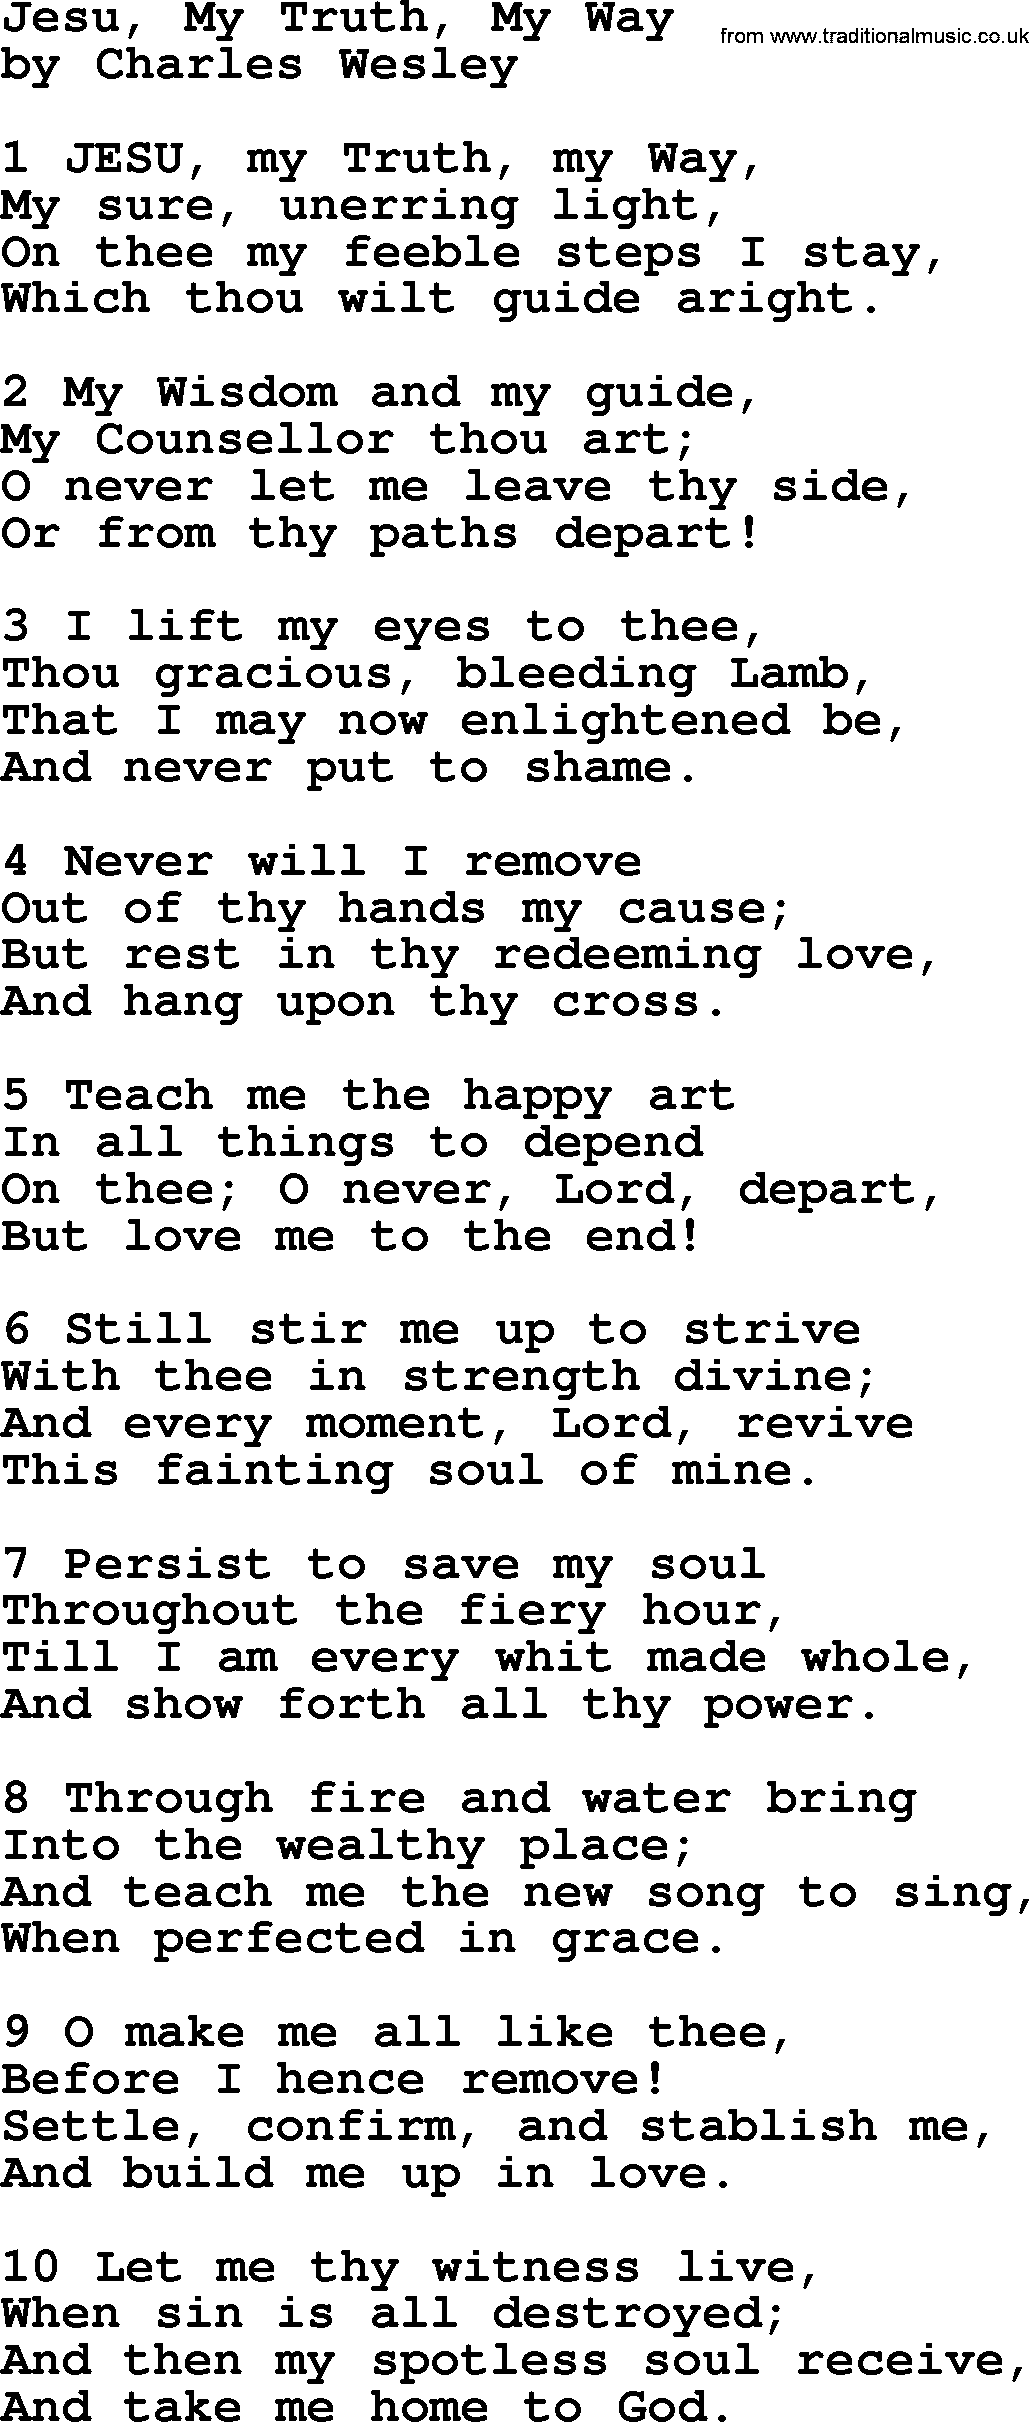 Charles Wesley hymn: Jesu, My Truth, My Way, lyrics